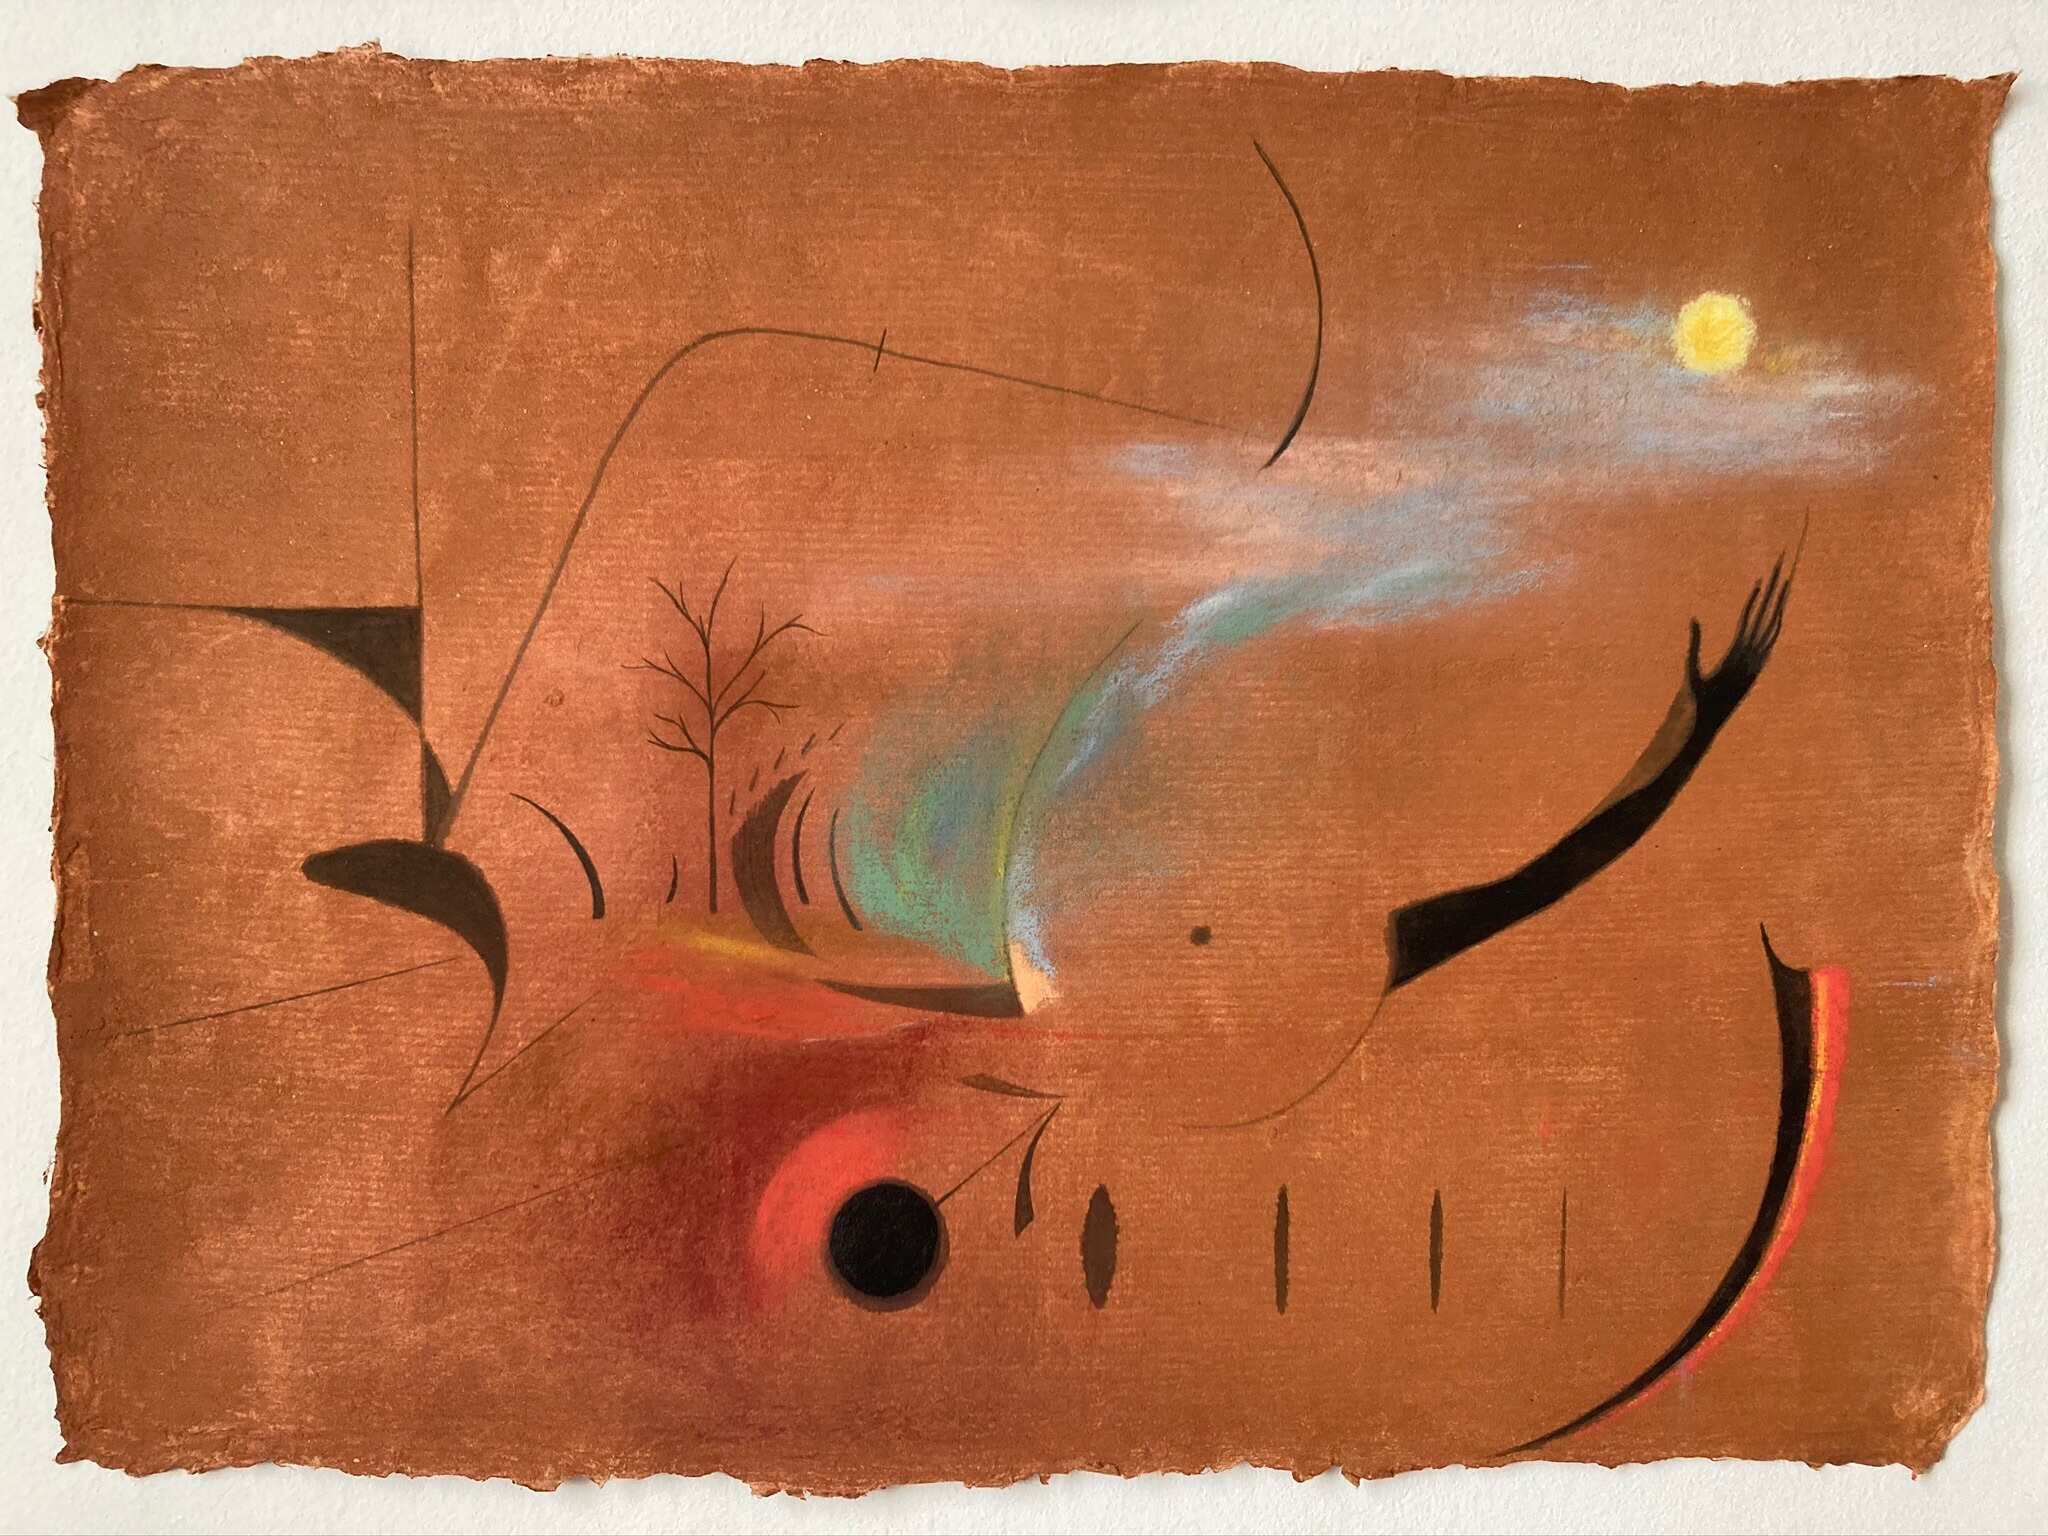 'Soul Searching', Ink on hemp paper, 34 x 30cm, 2020.